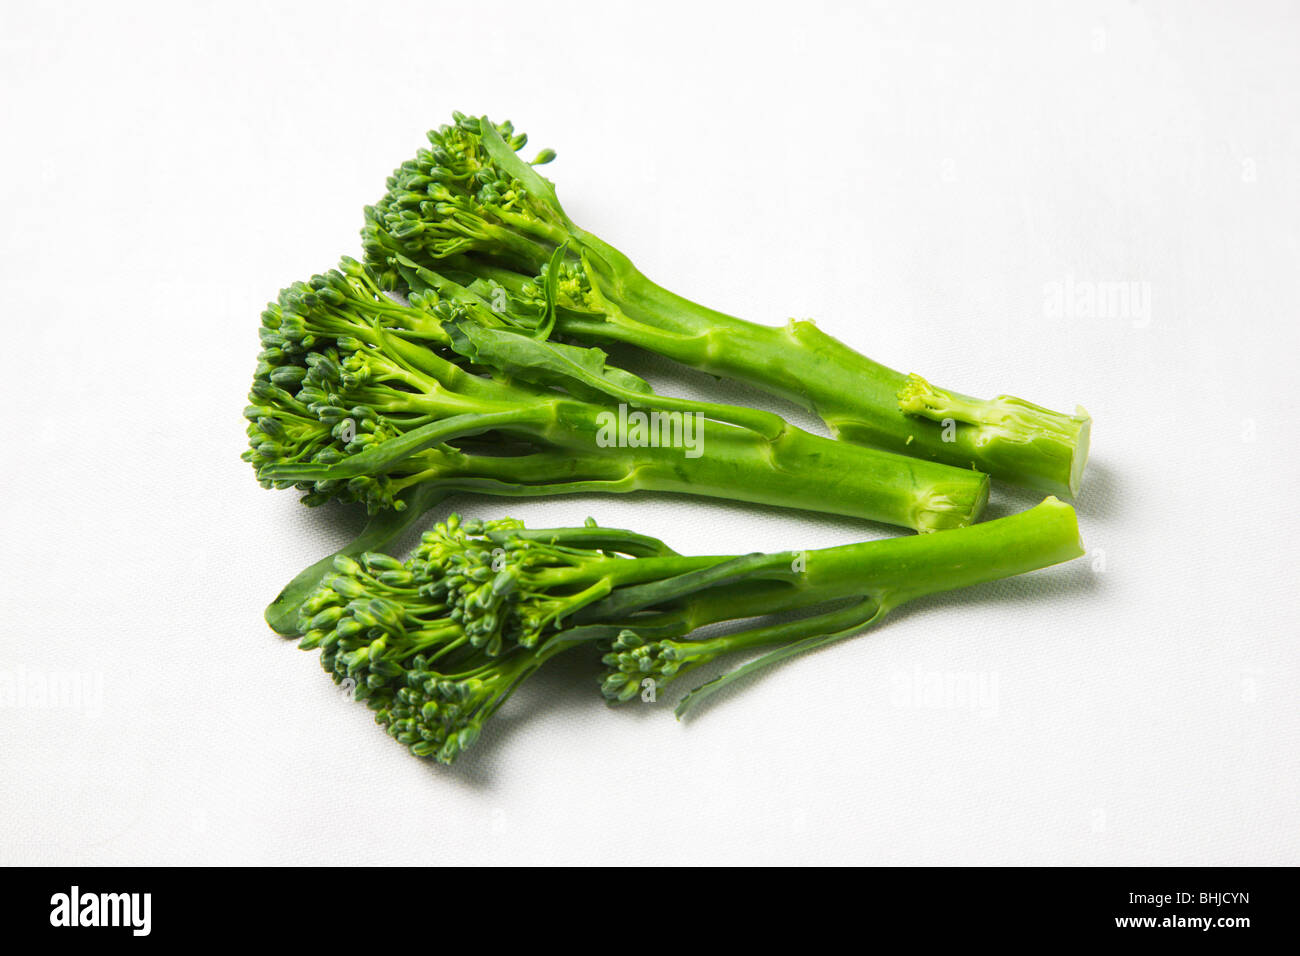 Tenderstem Broccoli on a White Background Stock Photo